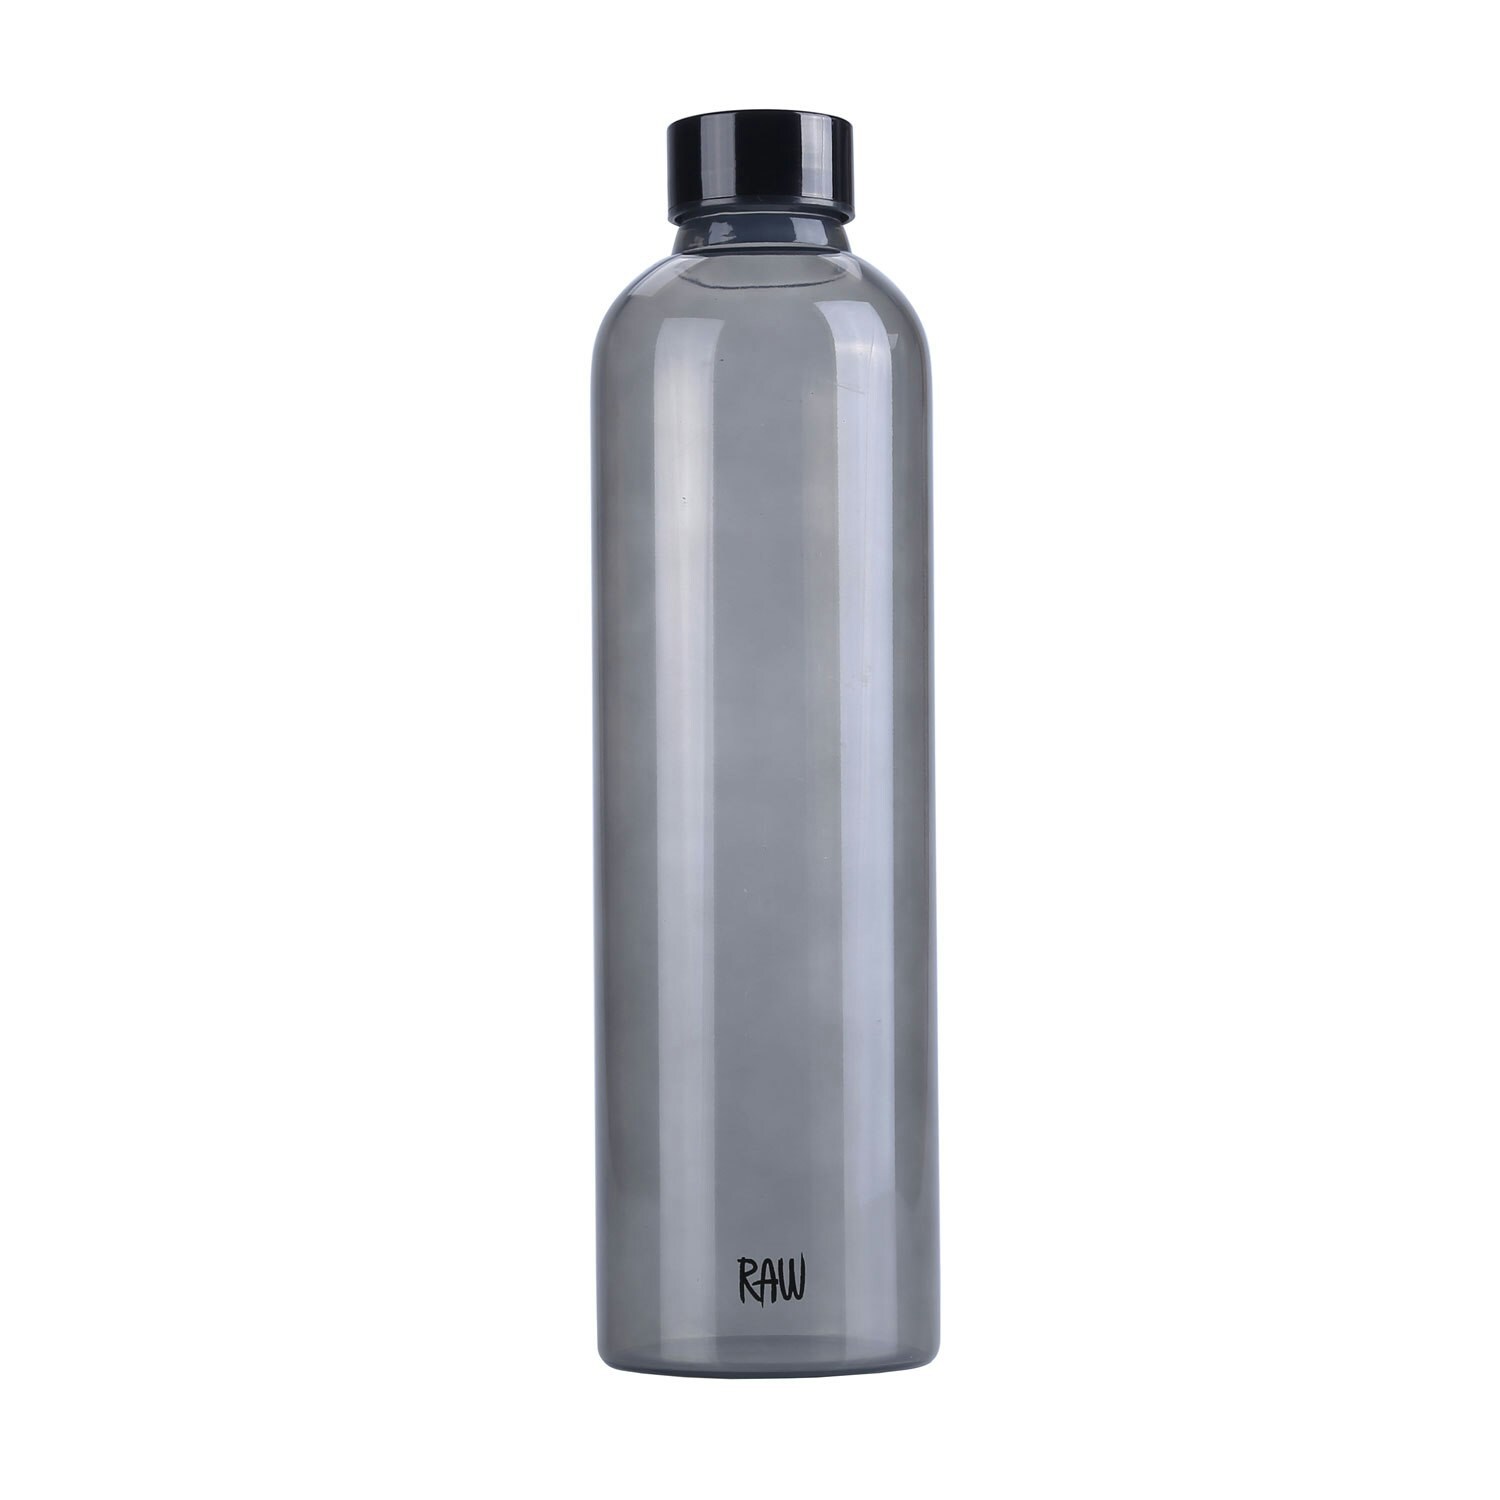 Stig Water Bottle 55 cl, Green - Sagaform @ RoyalDesign